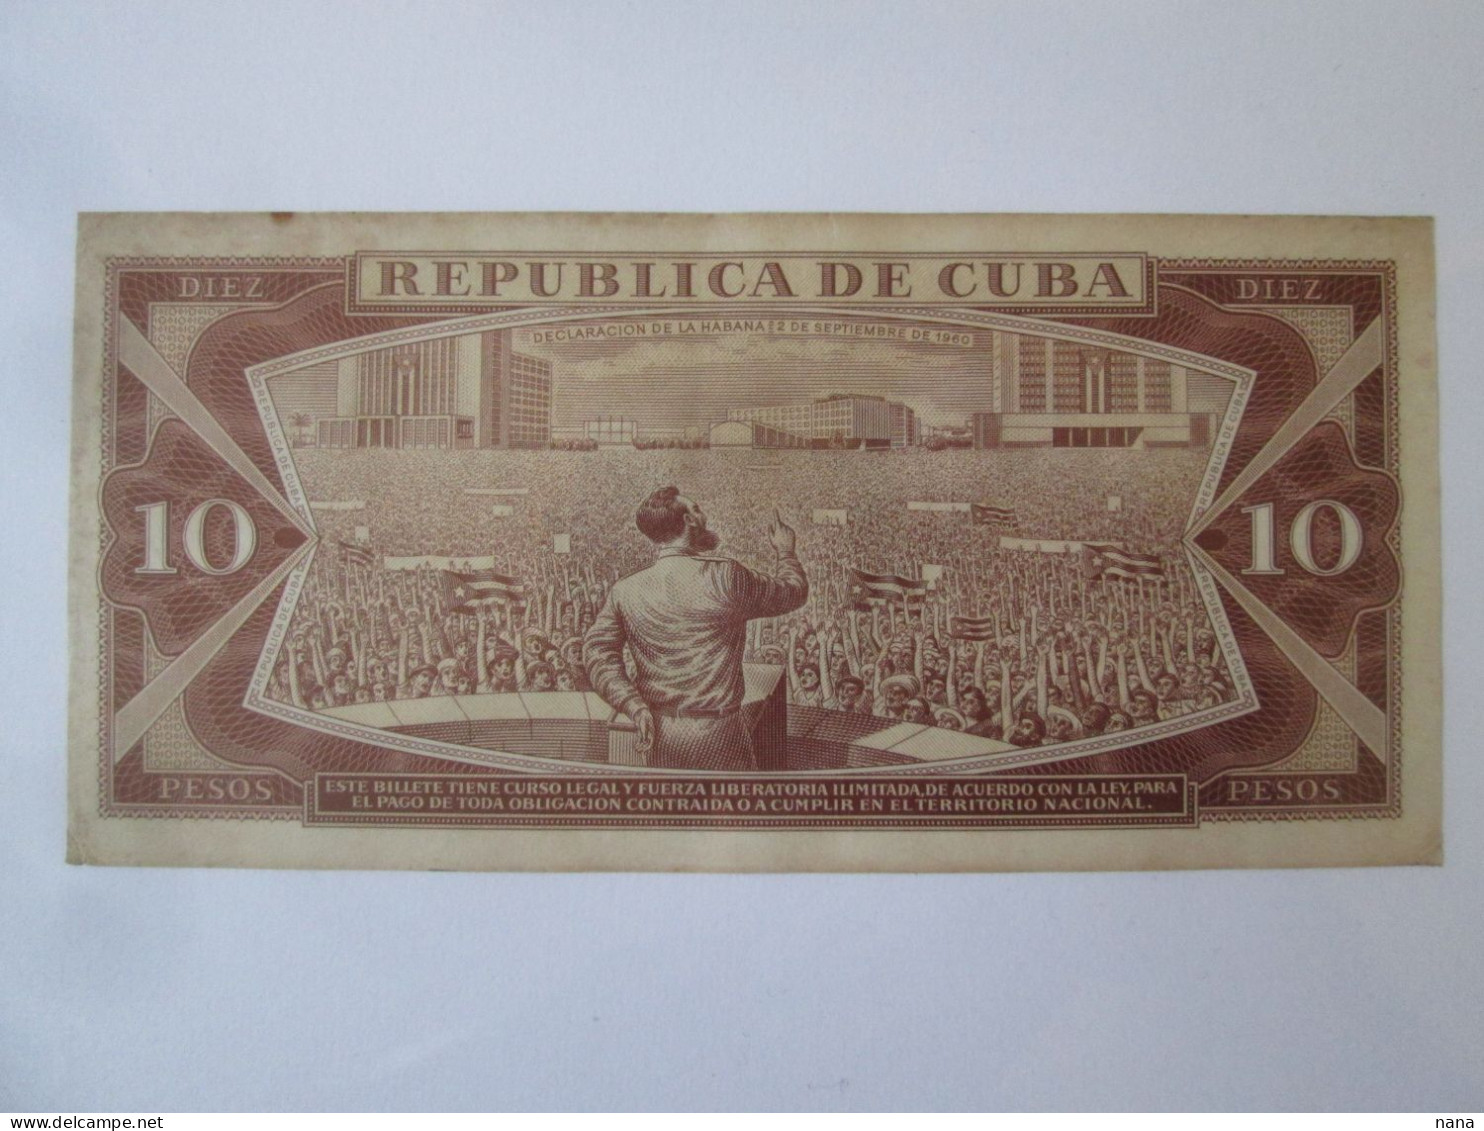 Rare! Cuba 10 Pesos 1961 Signature Ernesto Che Guevara Banknote See Pictures - Cuba